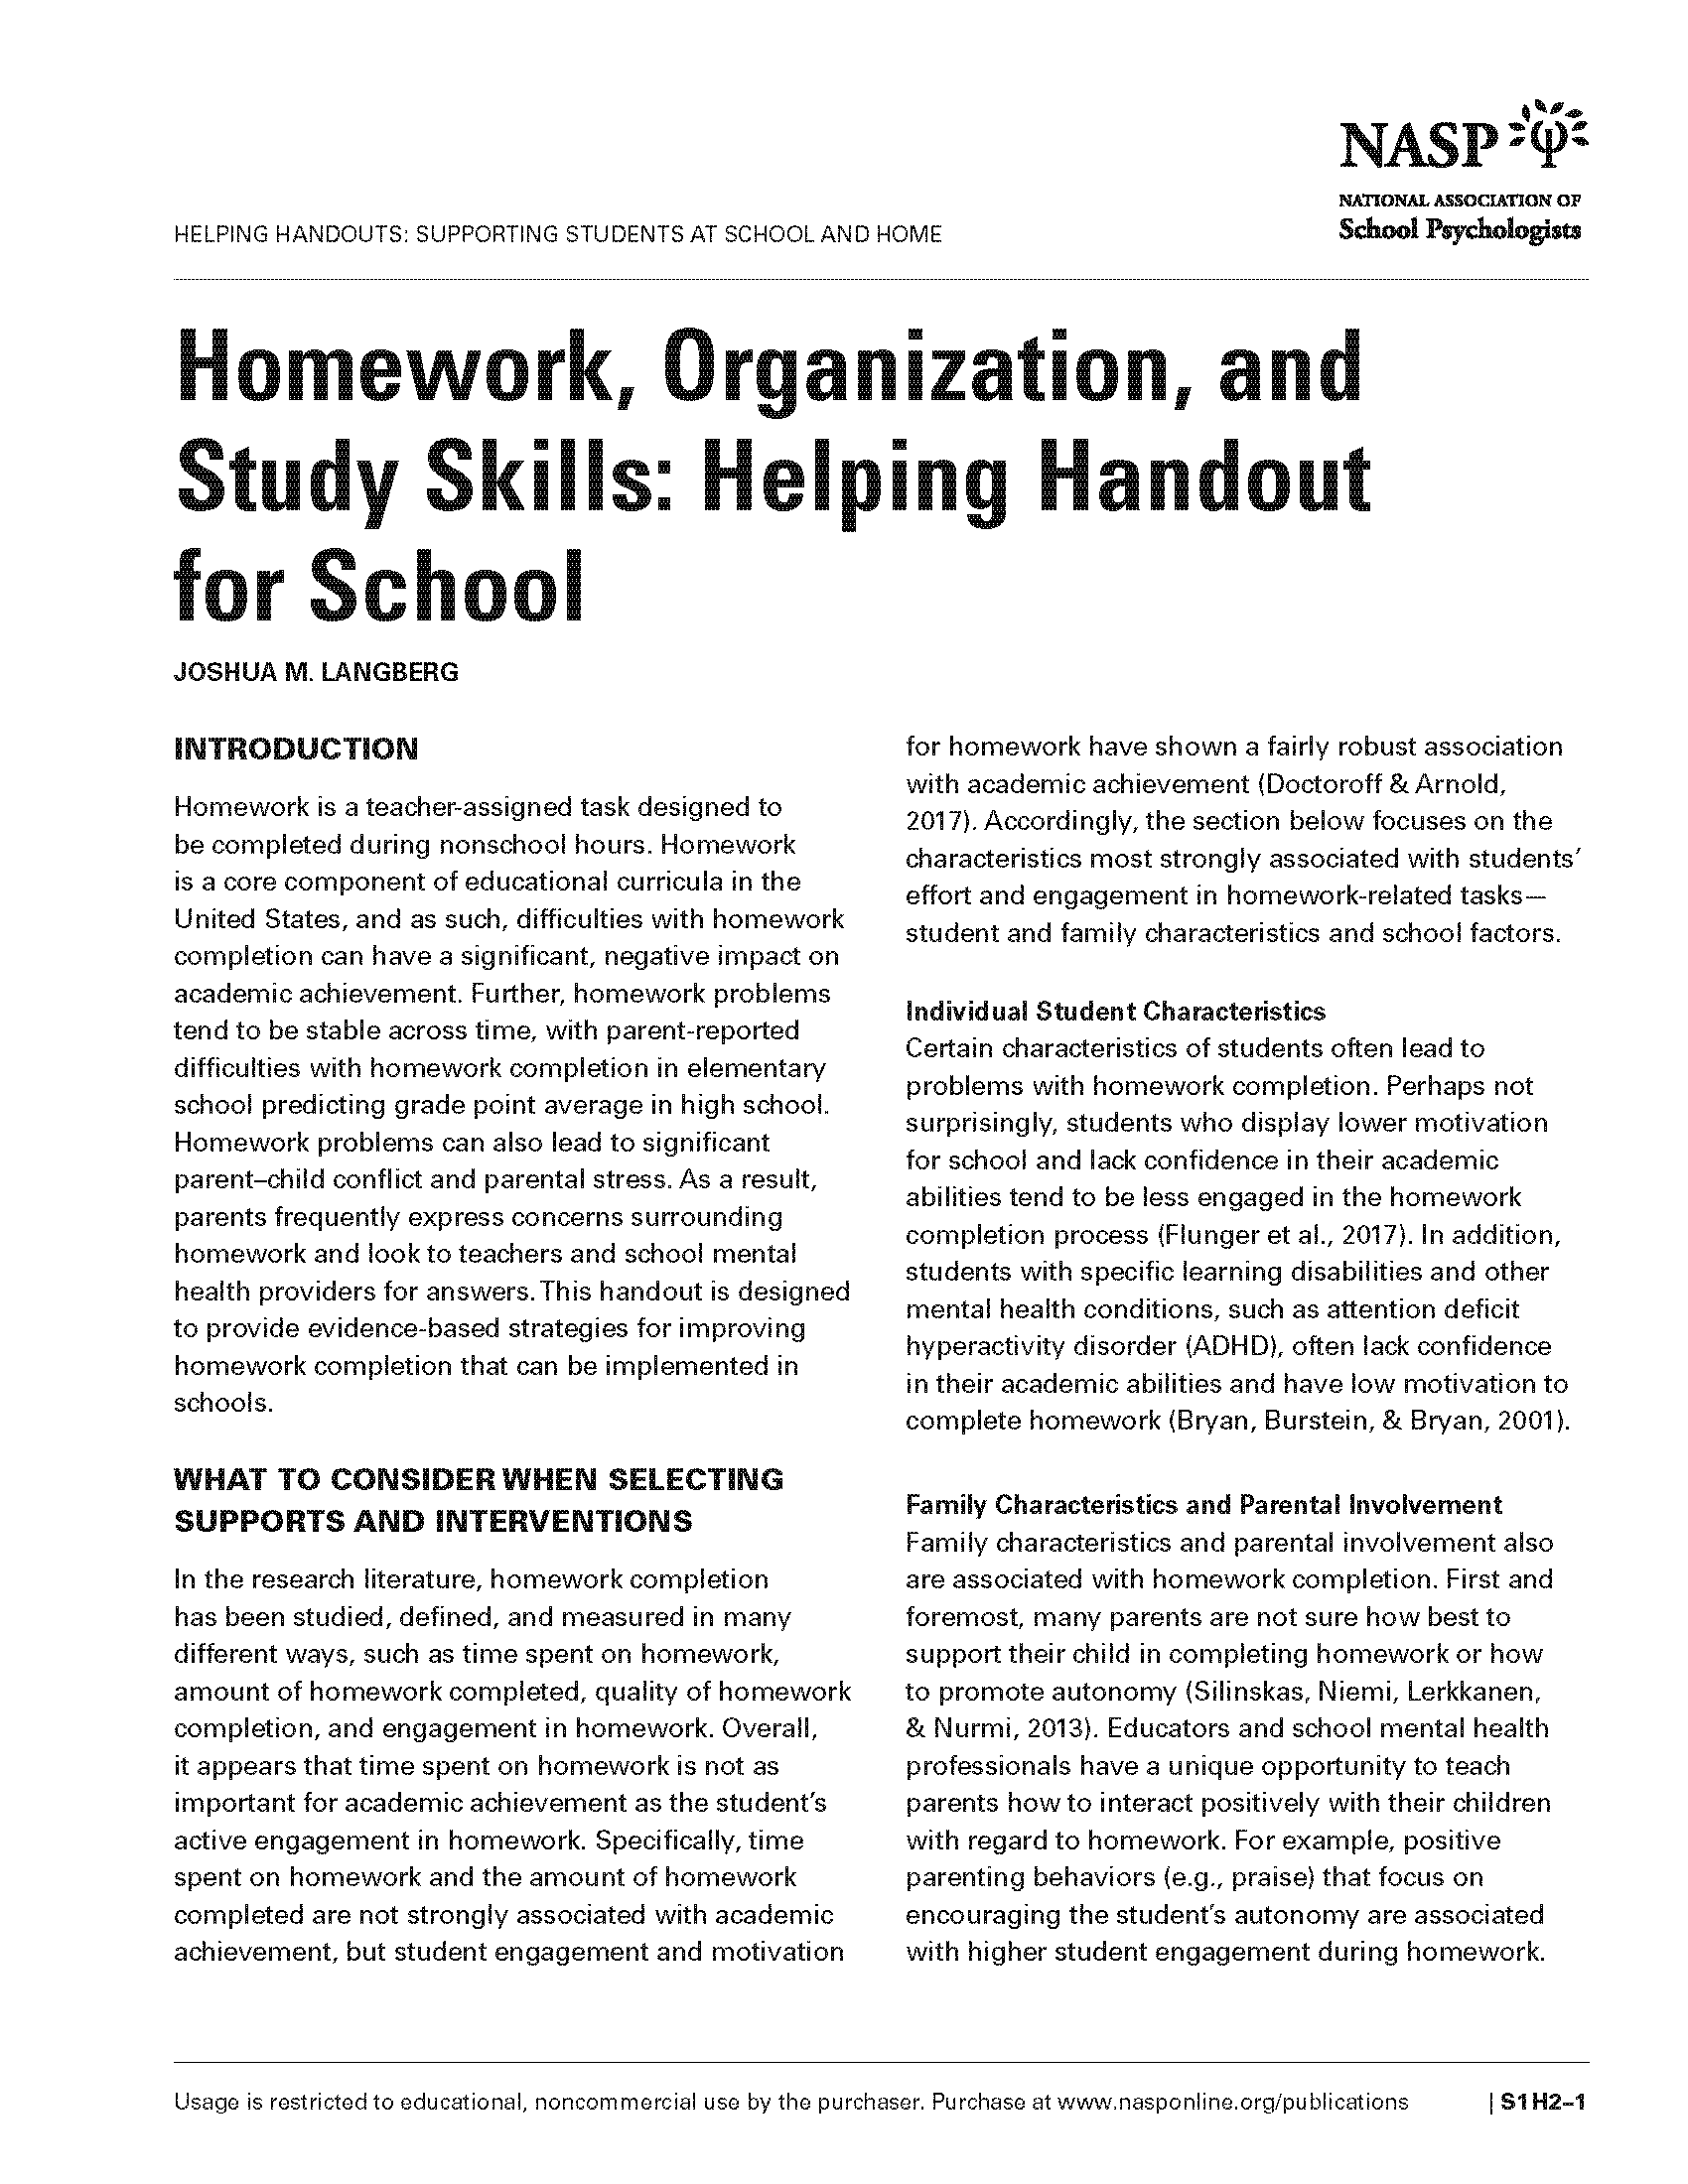 Homework, Organization, and Study Skills: Helping Handout for School